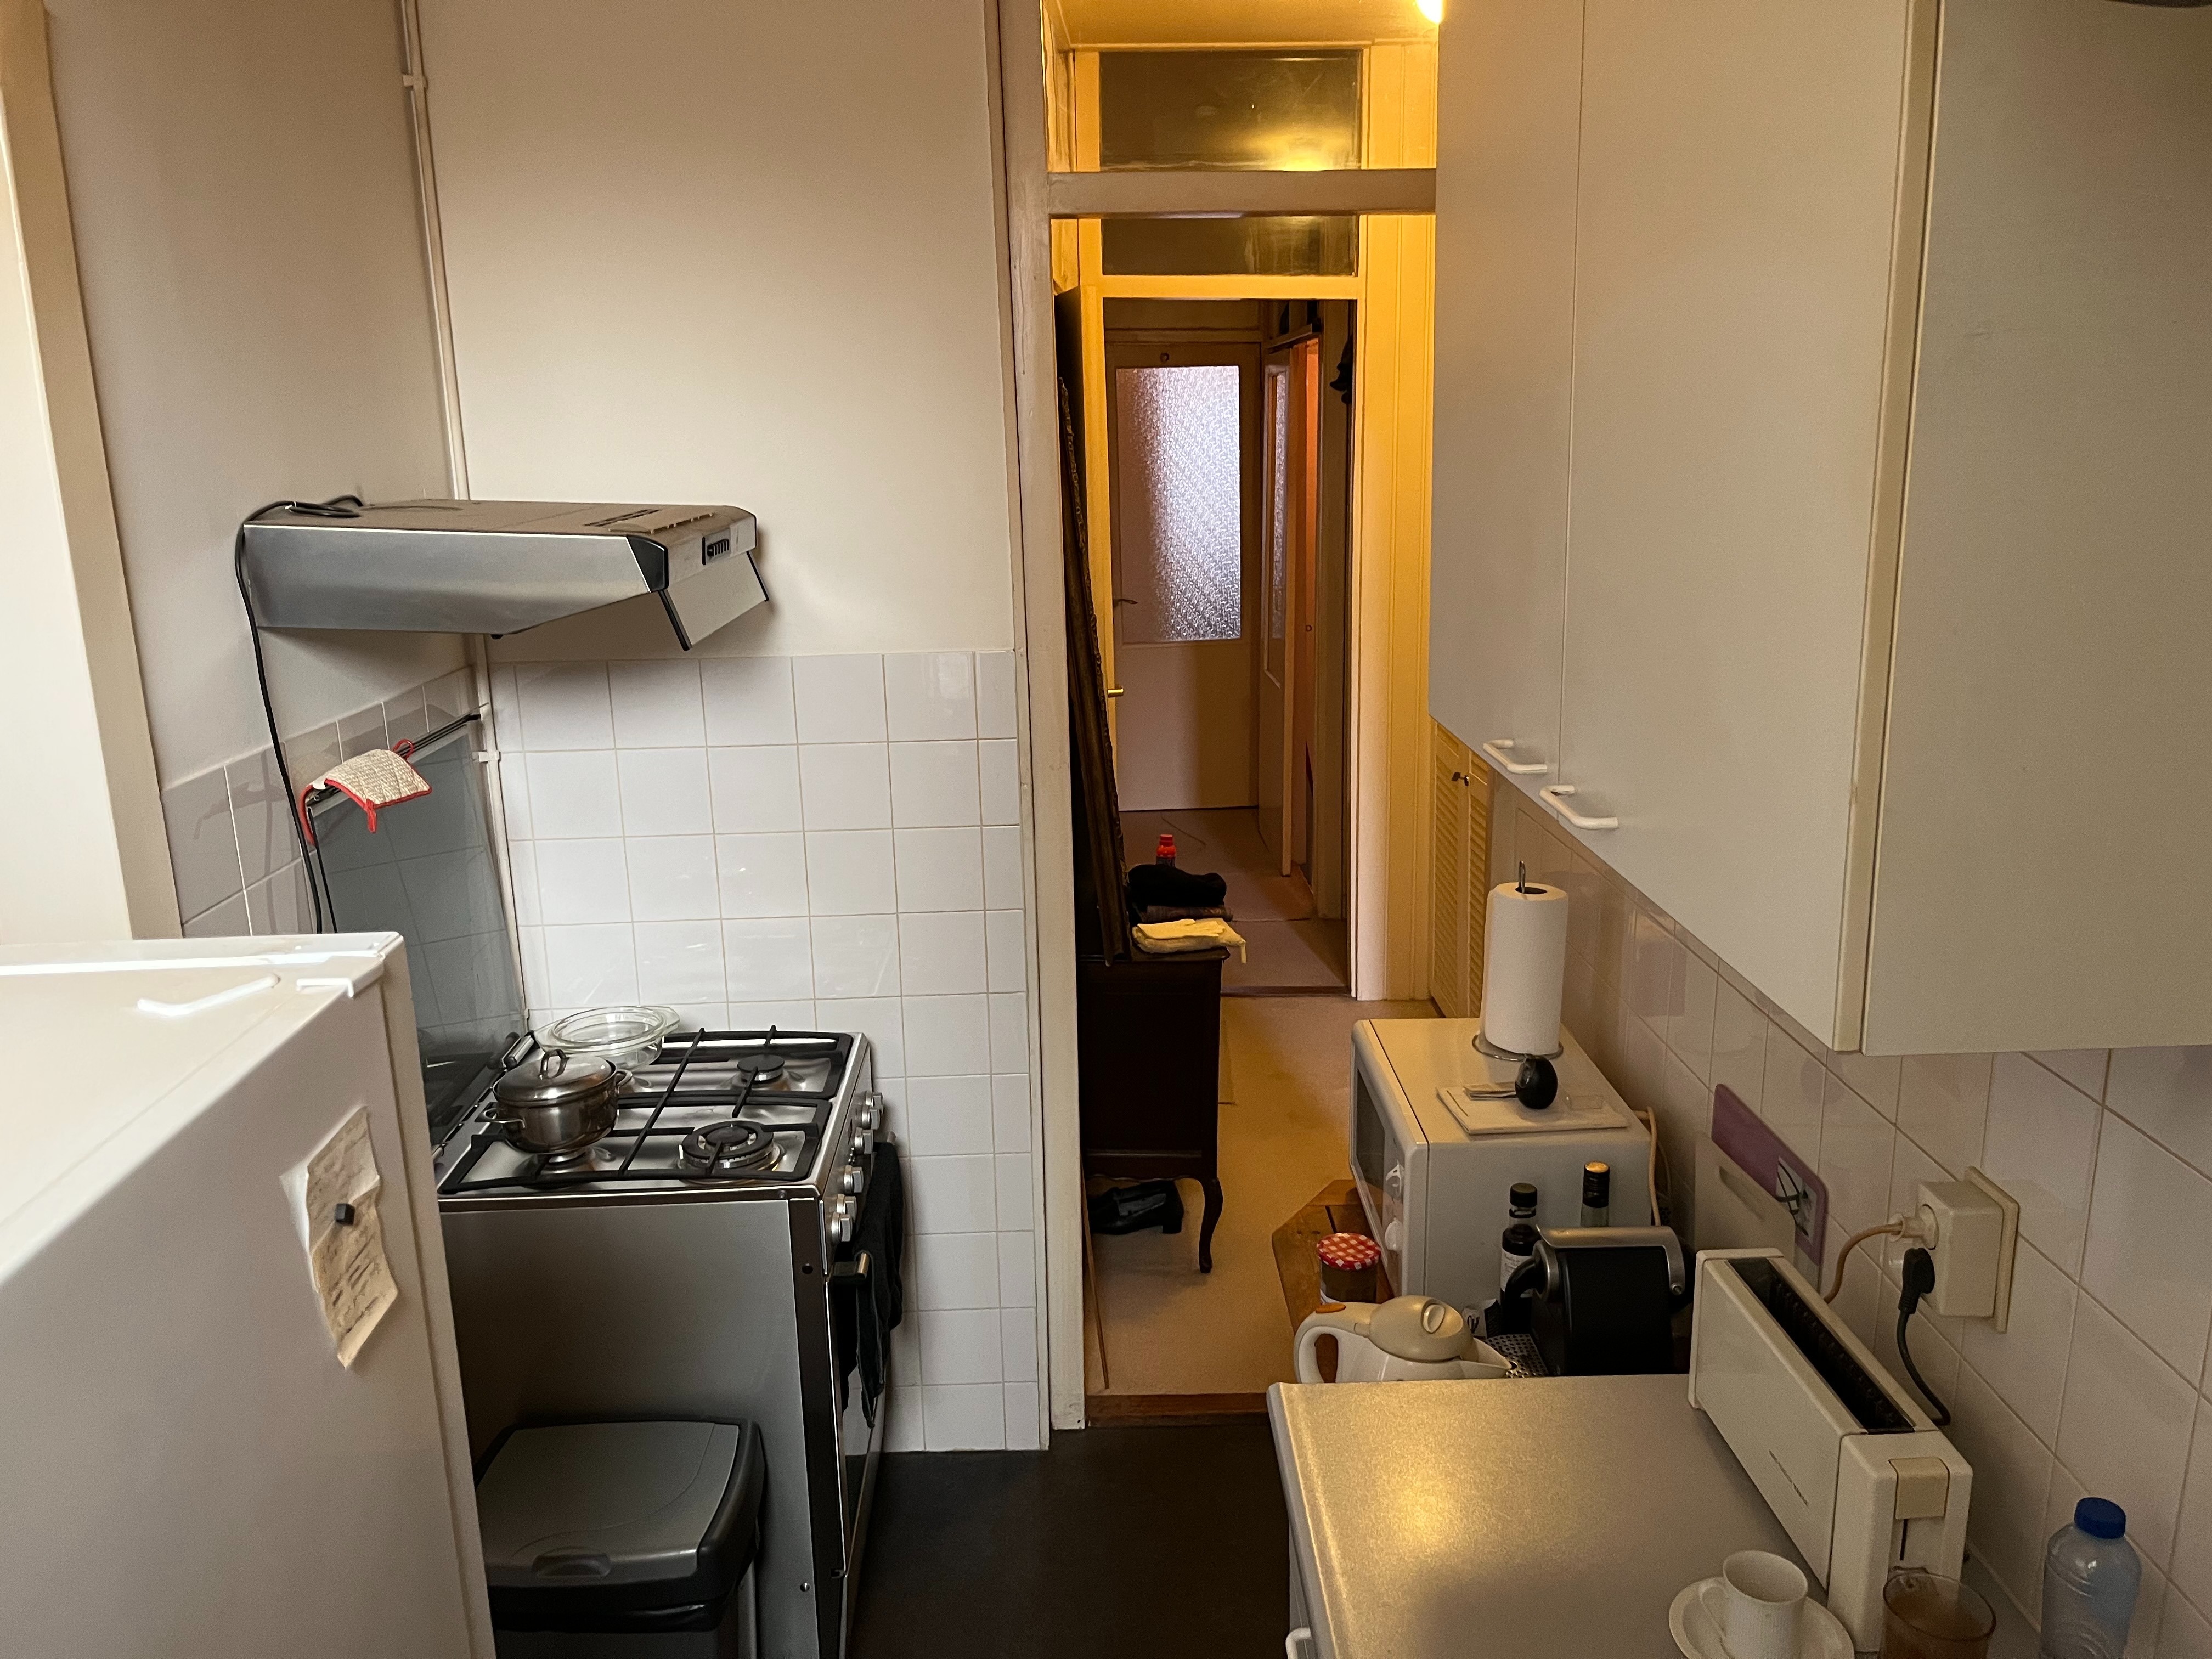 Woning / appartement - Amsterdam - Overtoom 495 1